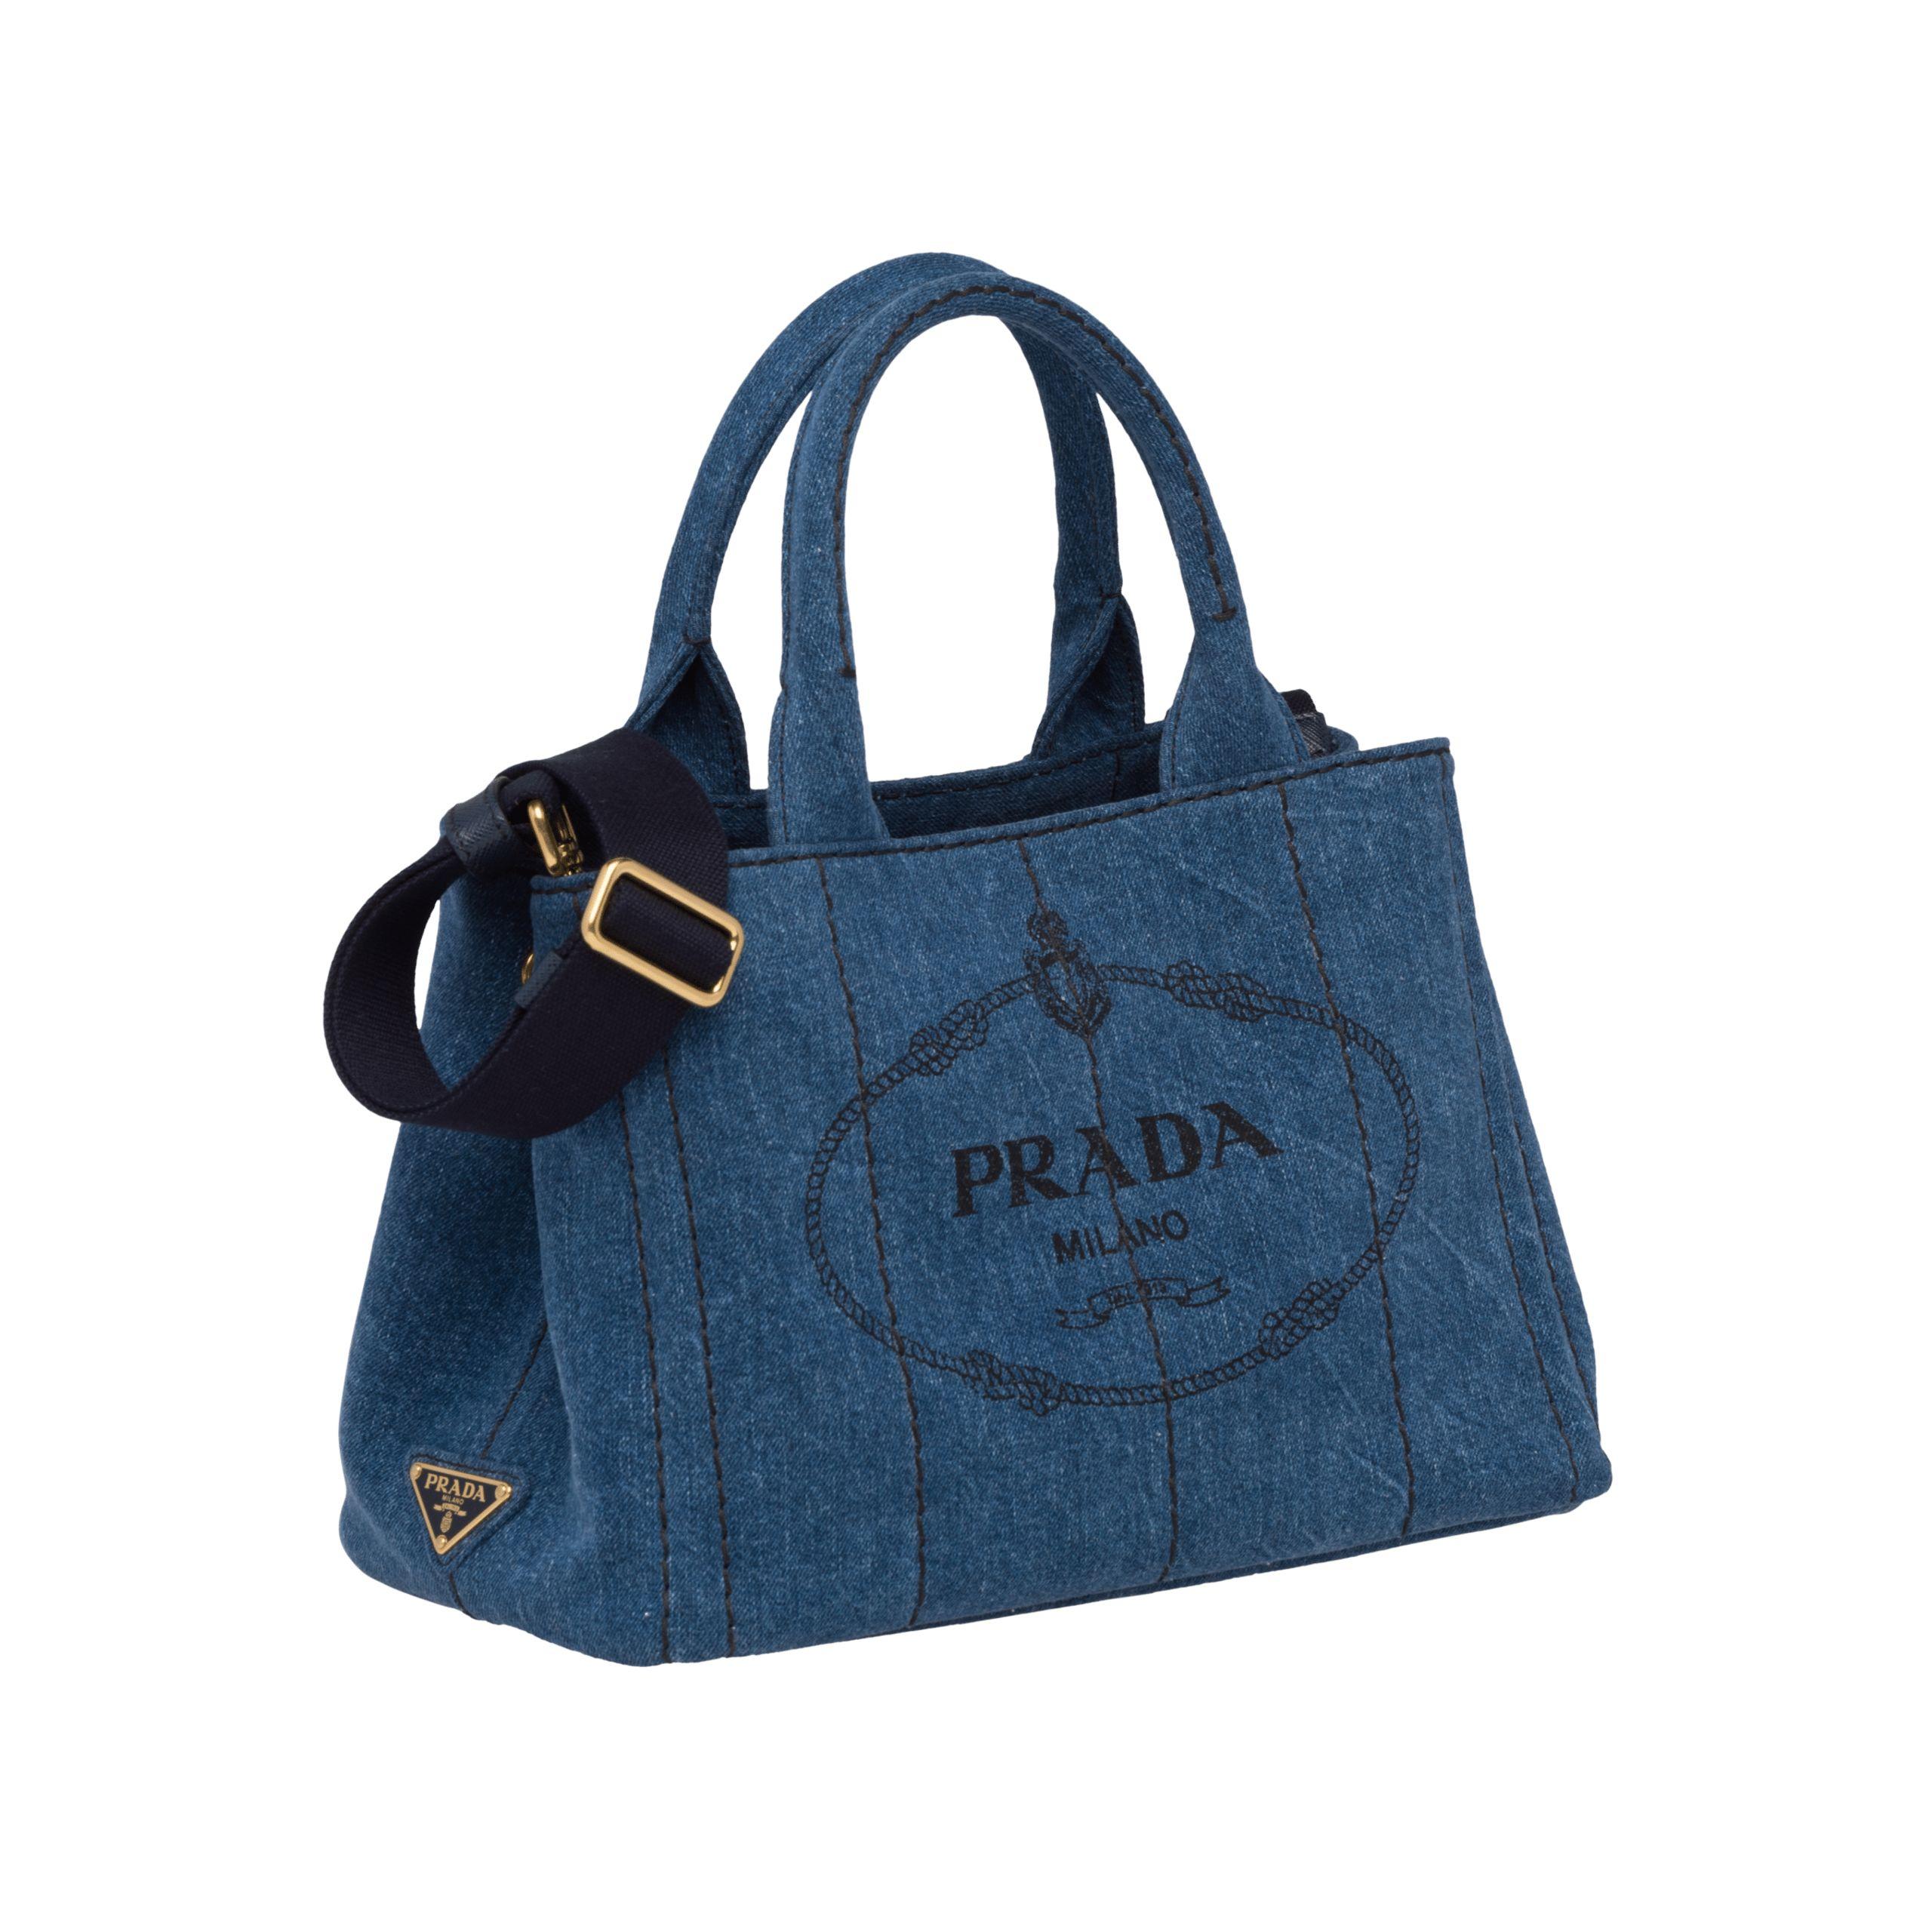 Prada - Authenticated Clutch Bag - Denim - Jeans Blue Plain for Women, Very Good Condition